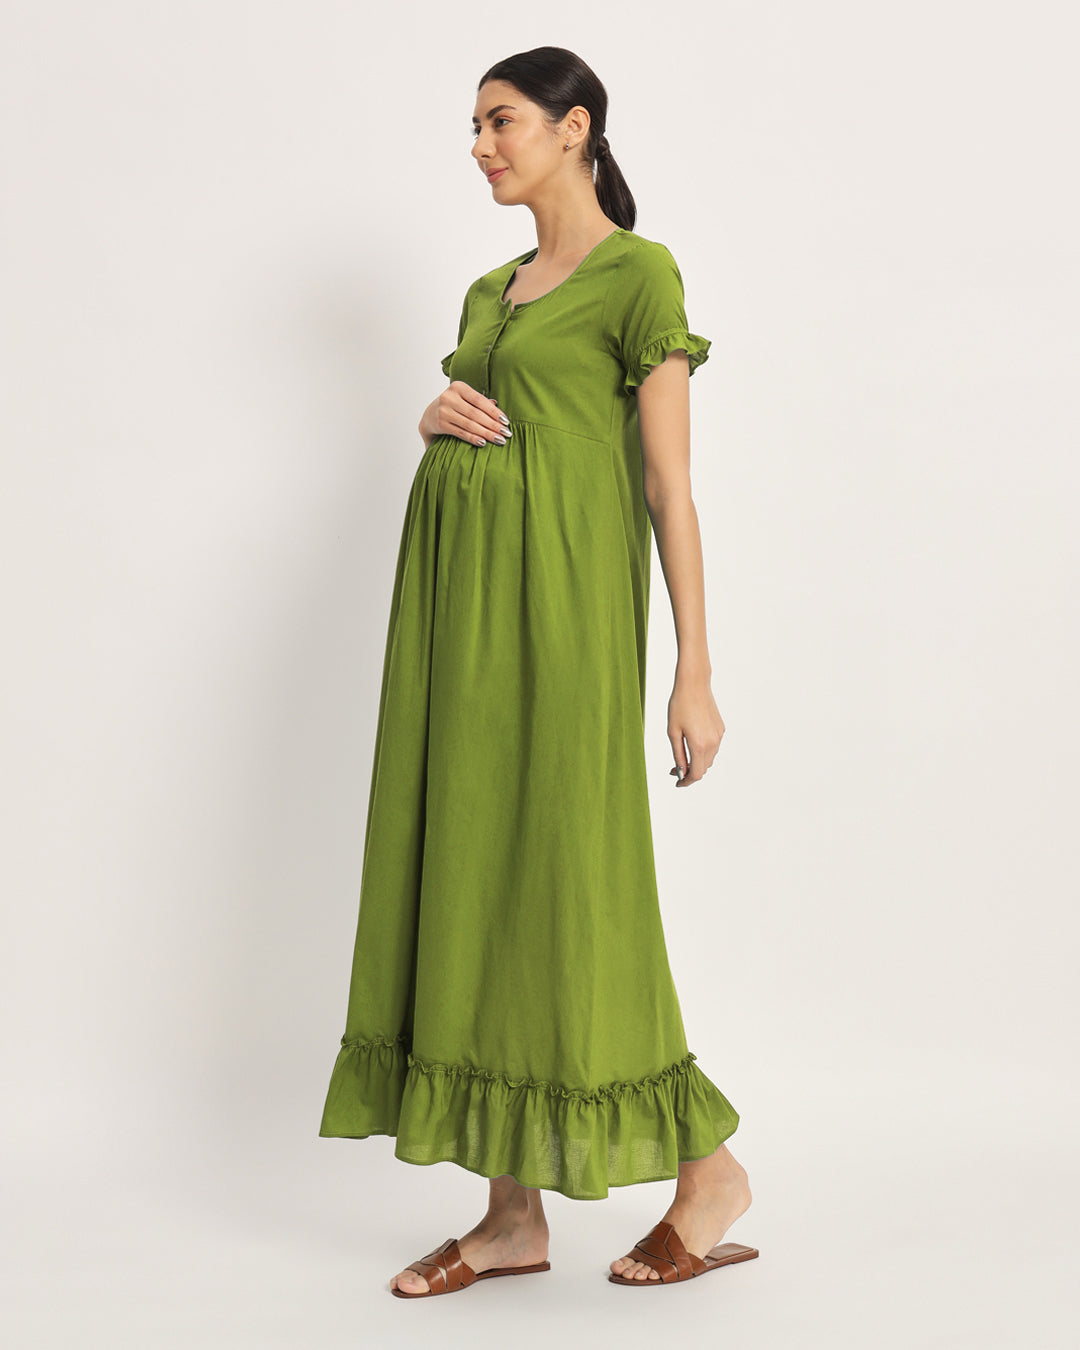 Combo: Iris Pink & Sage Green Bumpin' & Stylin' Maternity & Nursing Dress - Set of 2